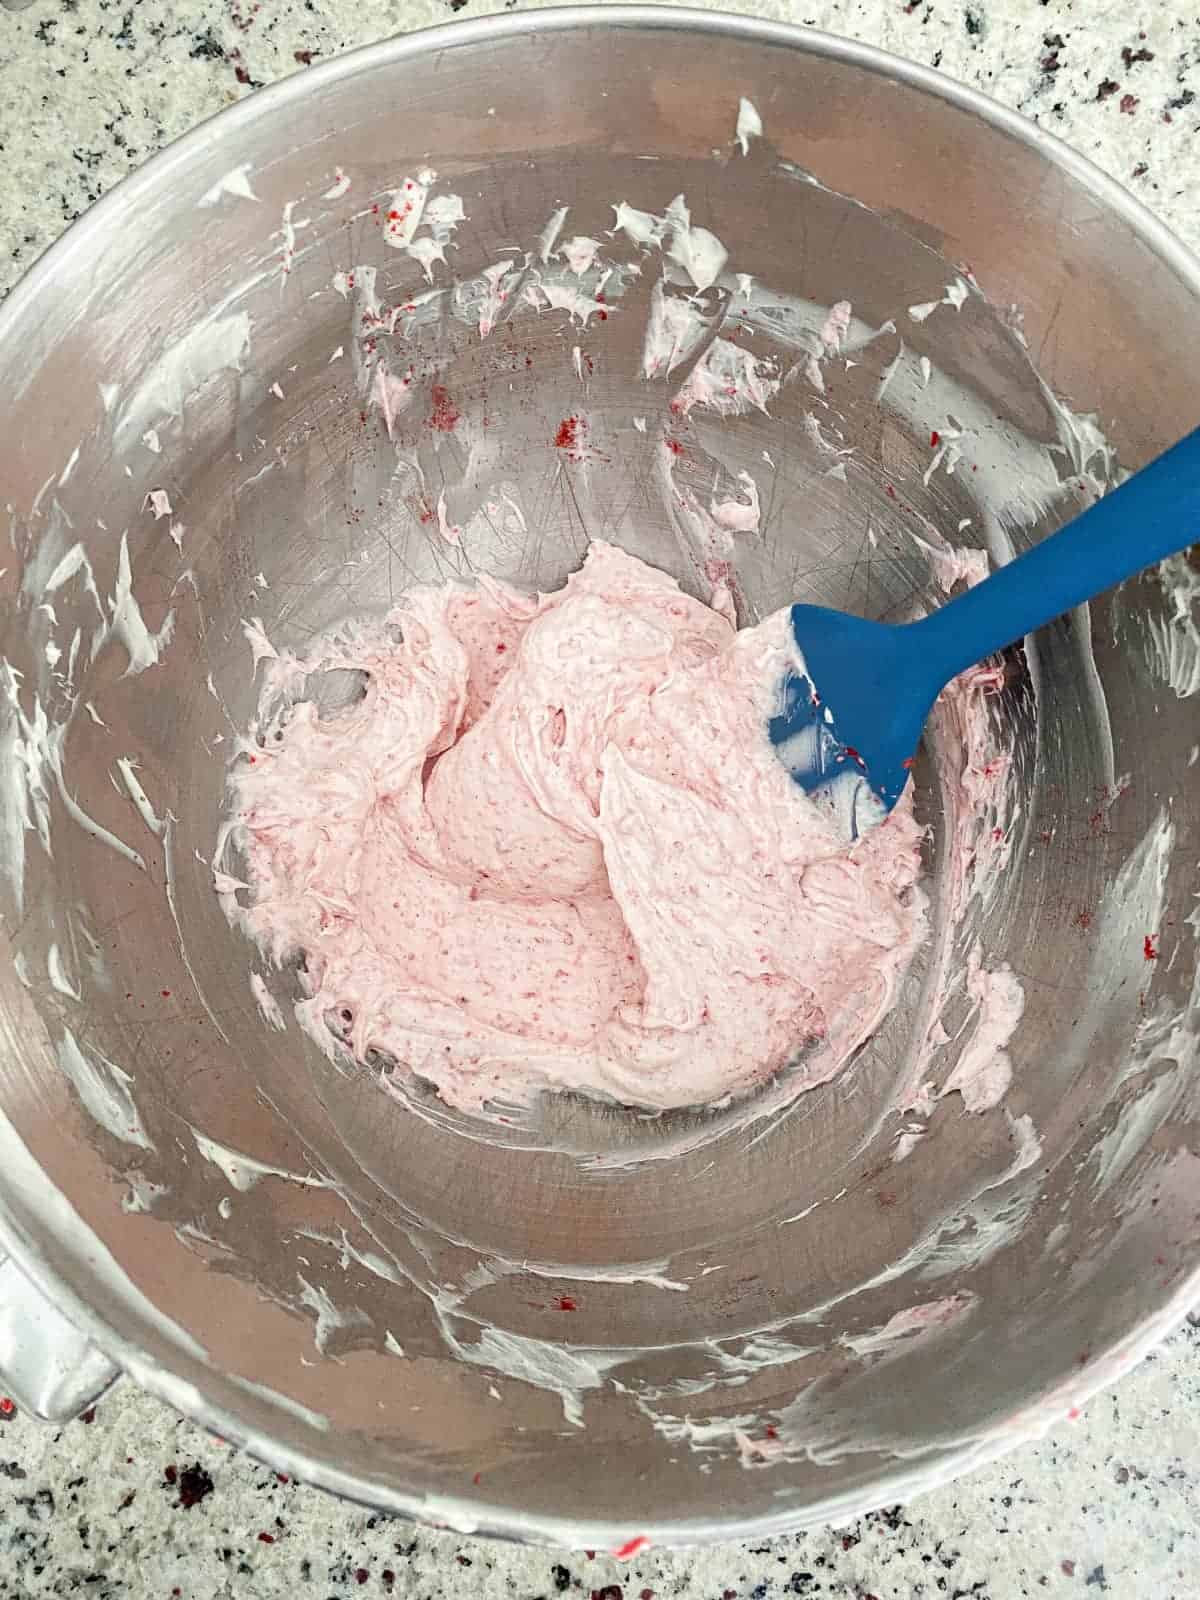 Making Strawberry Crunch Cheesecake step 3.